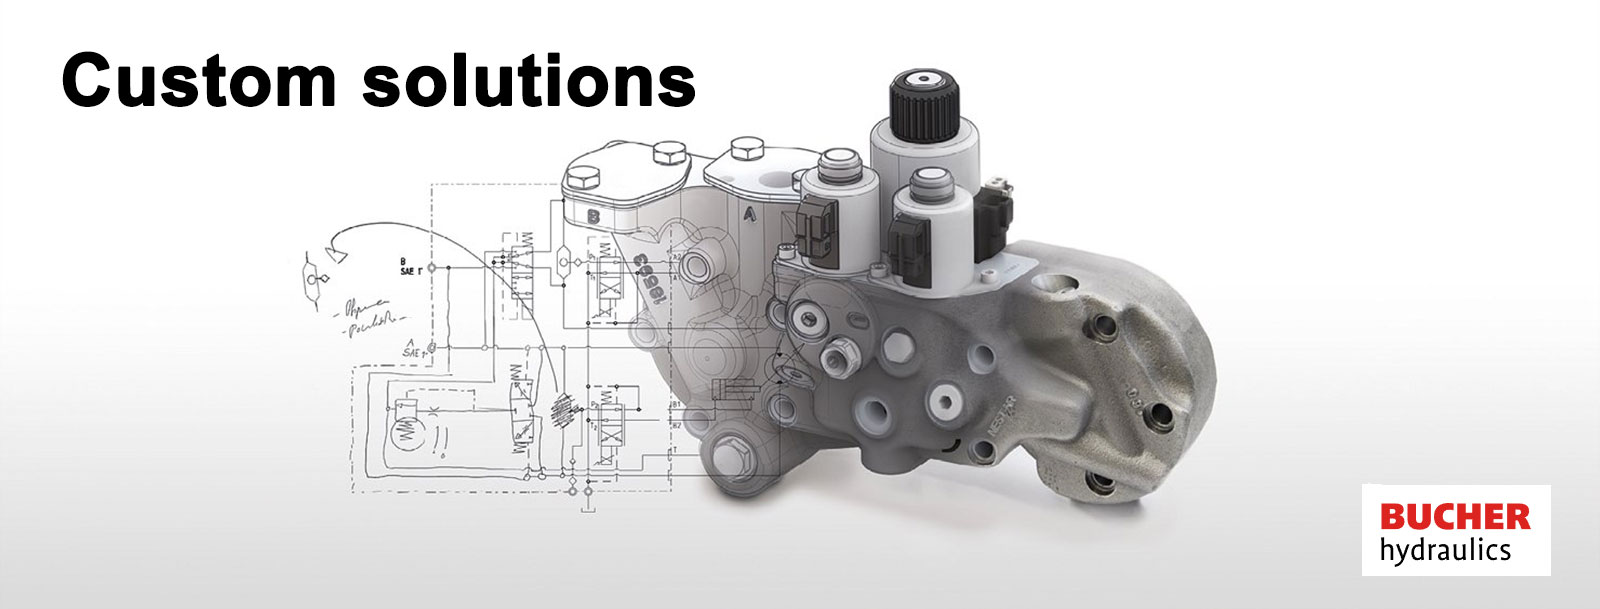 Bucher Hydraulics: Innovative hydraulic drive and control technologies